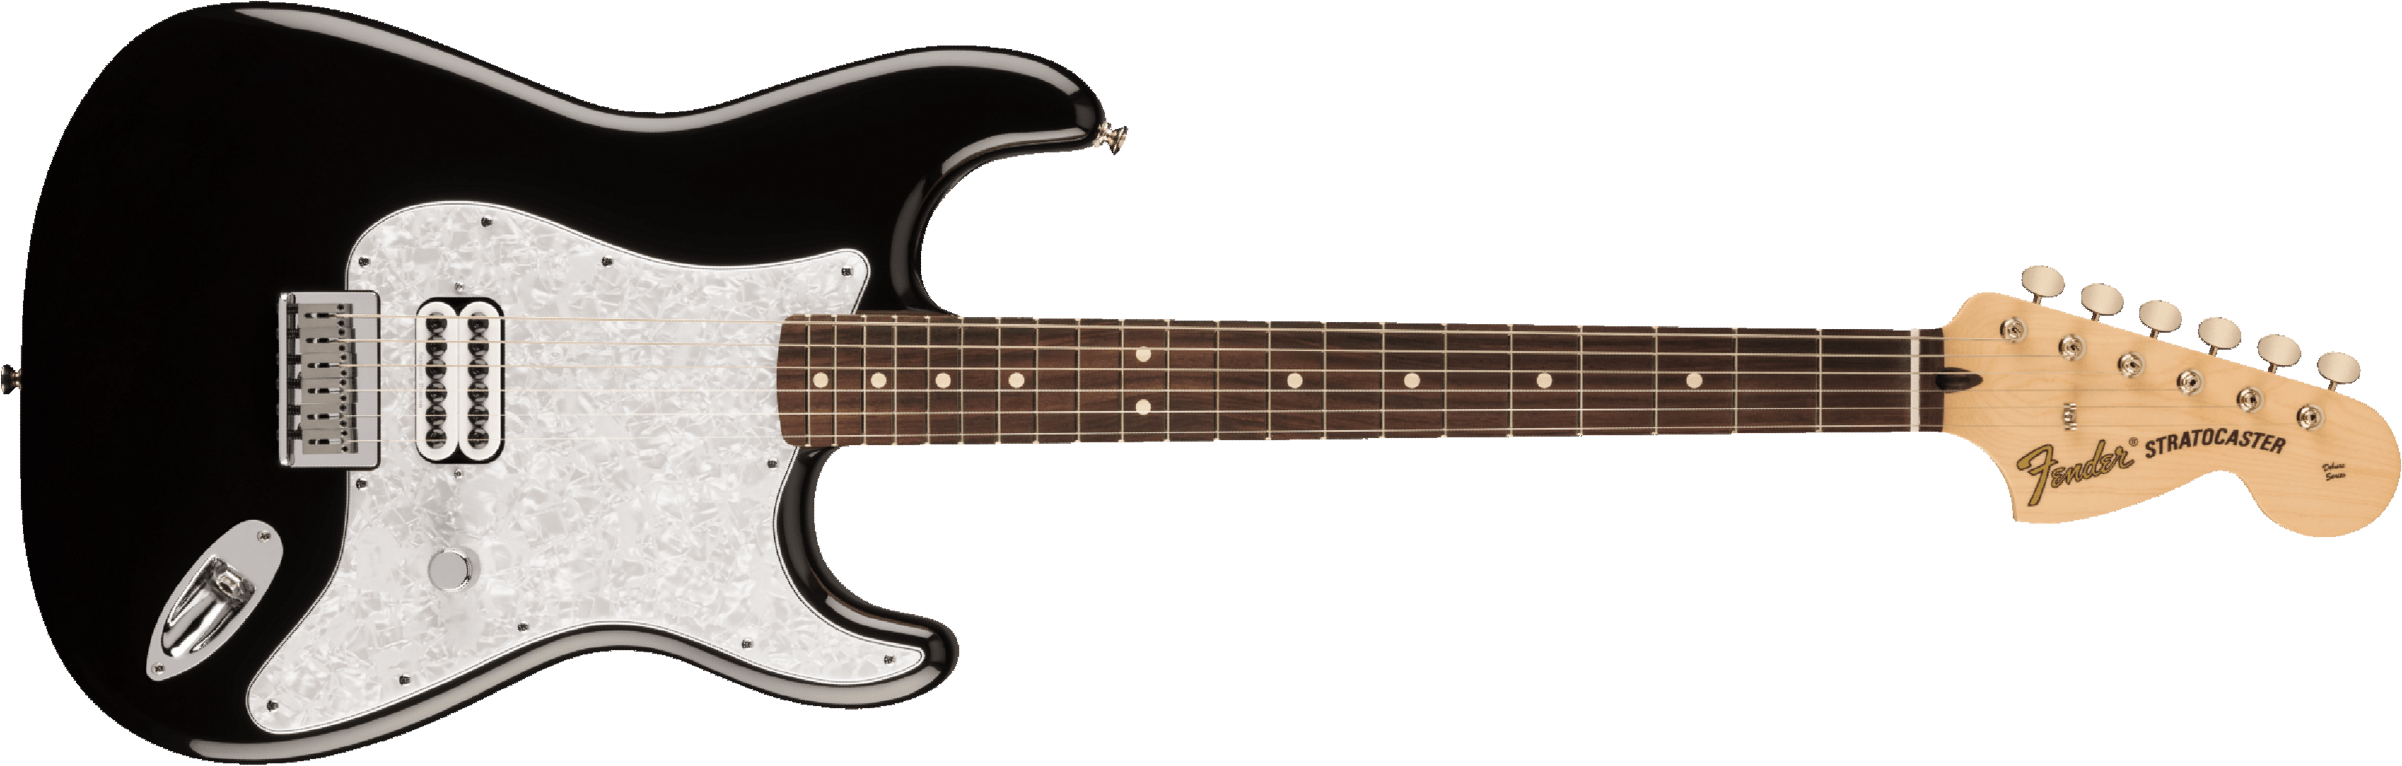 Fender Tom Delonge Ltd Mex Signature 1h Ht Rw - Black - Str shape electric guitar - Main picture